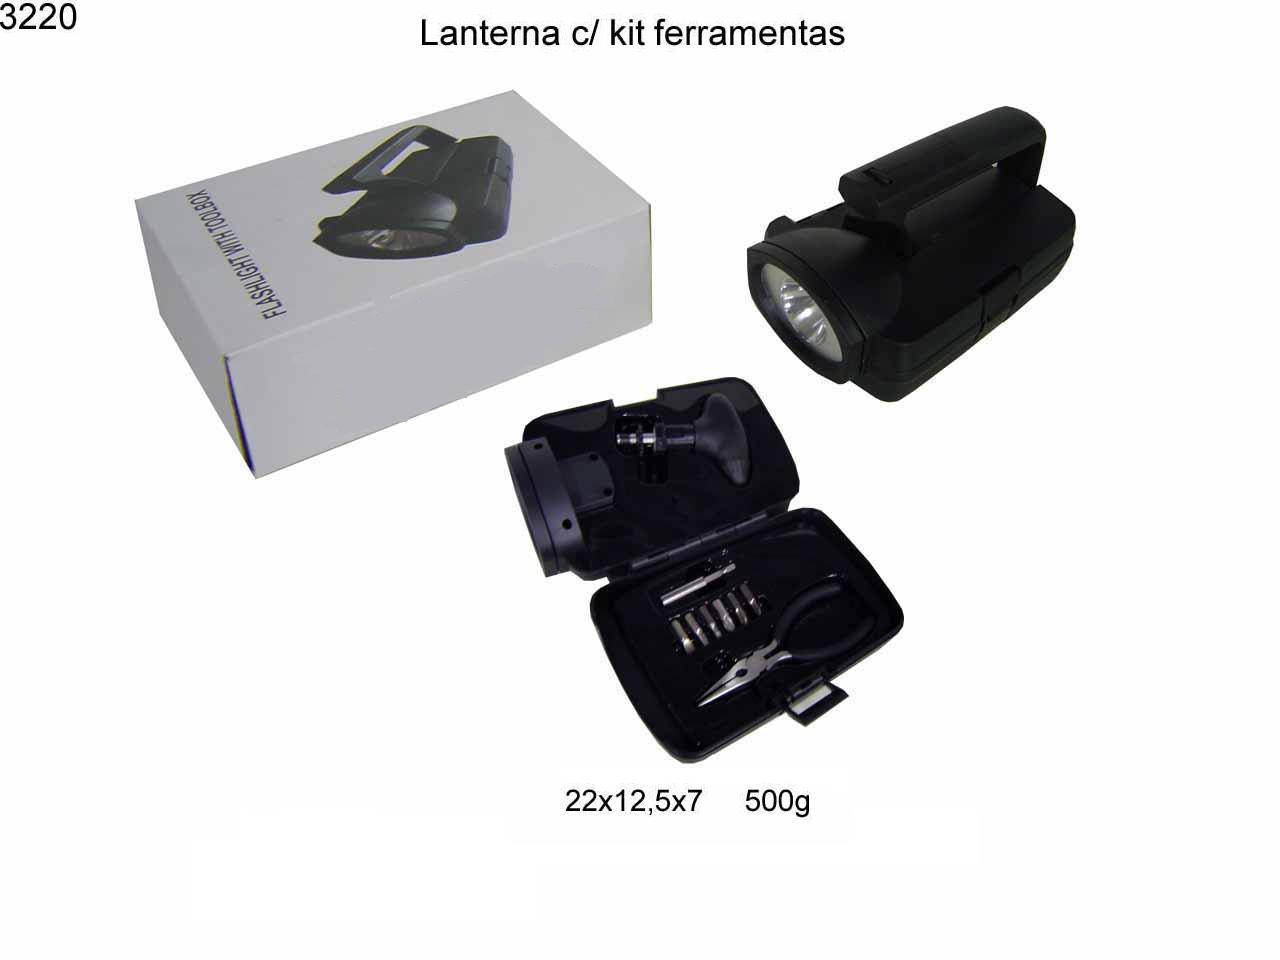 Lanterna c/ kit ferramentas (3220)